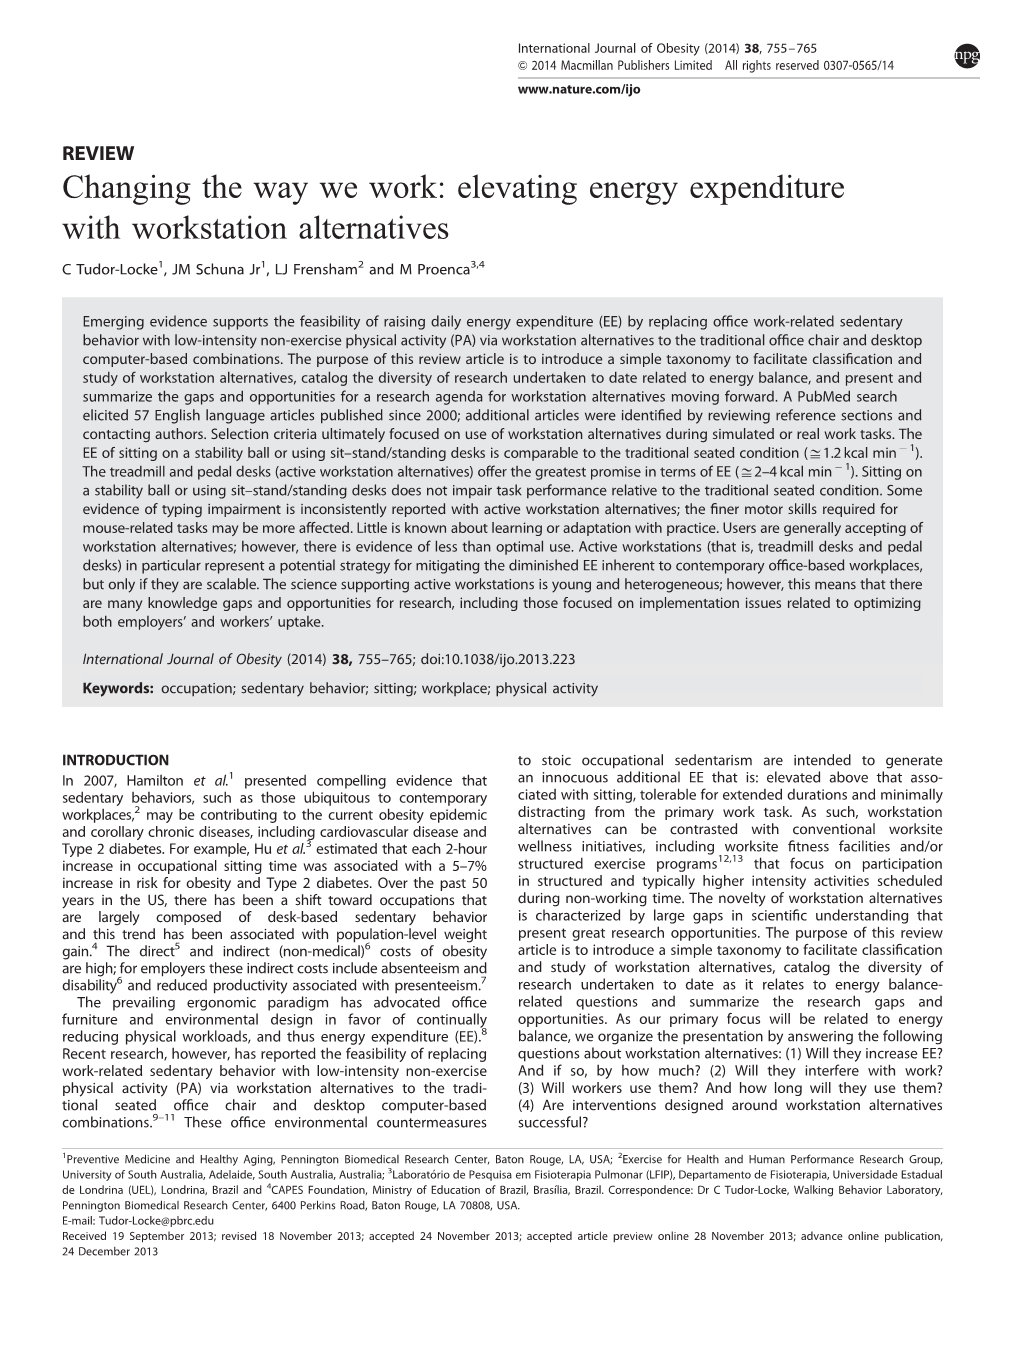 Elevating Energy Expenditure with Workstation Alternatives